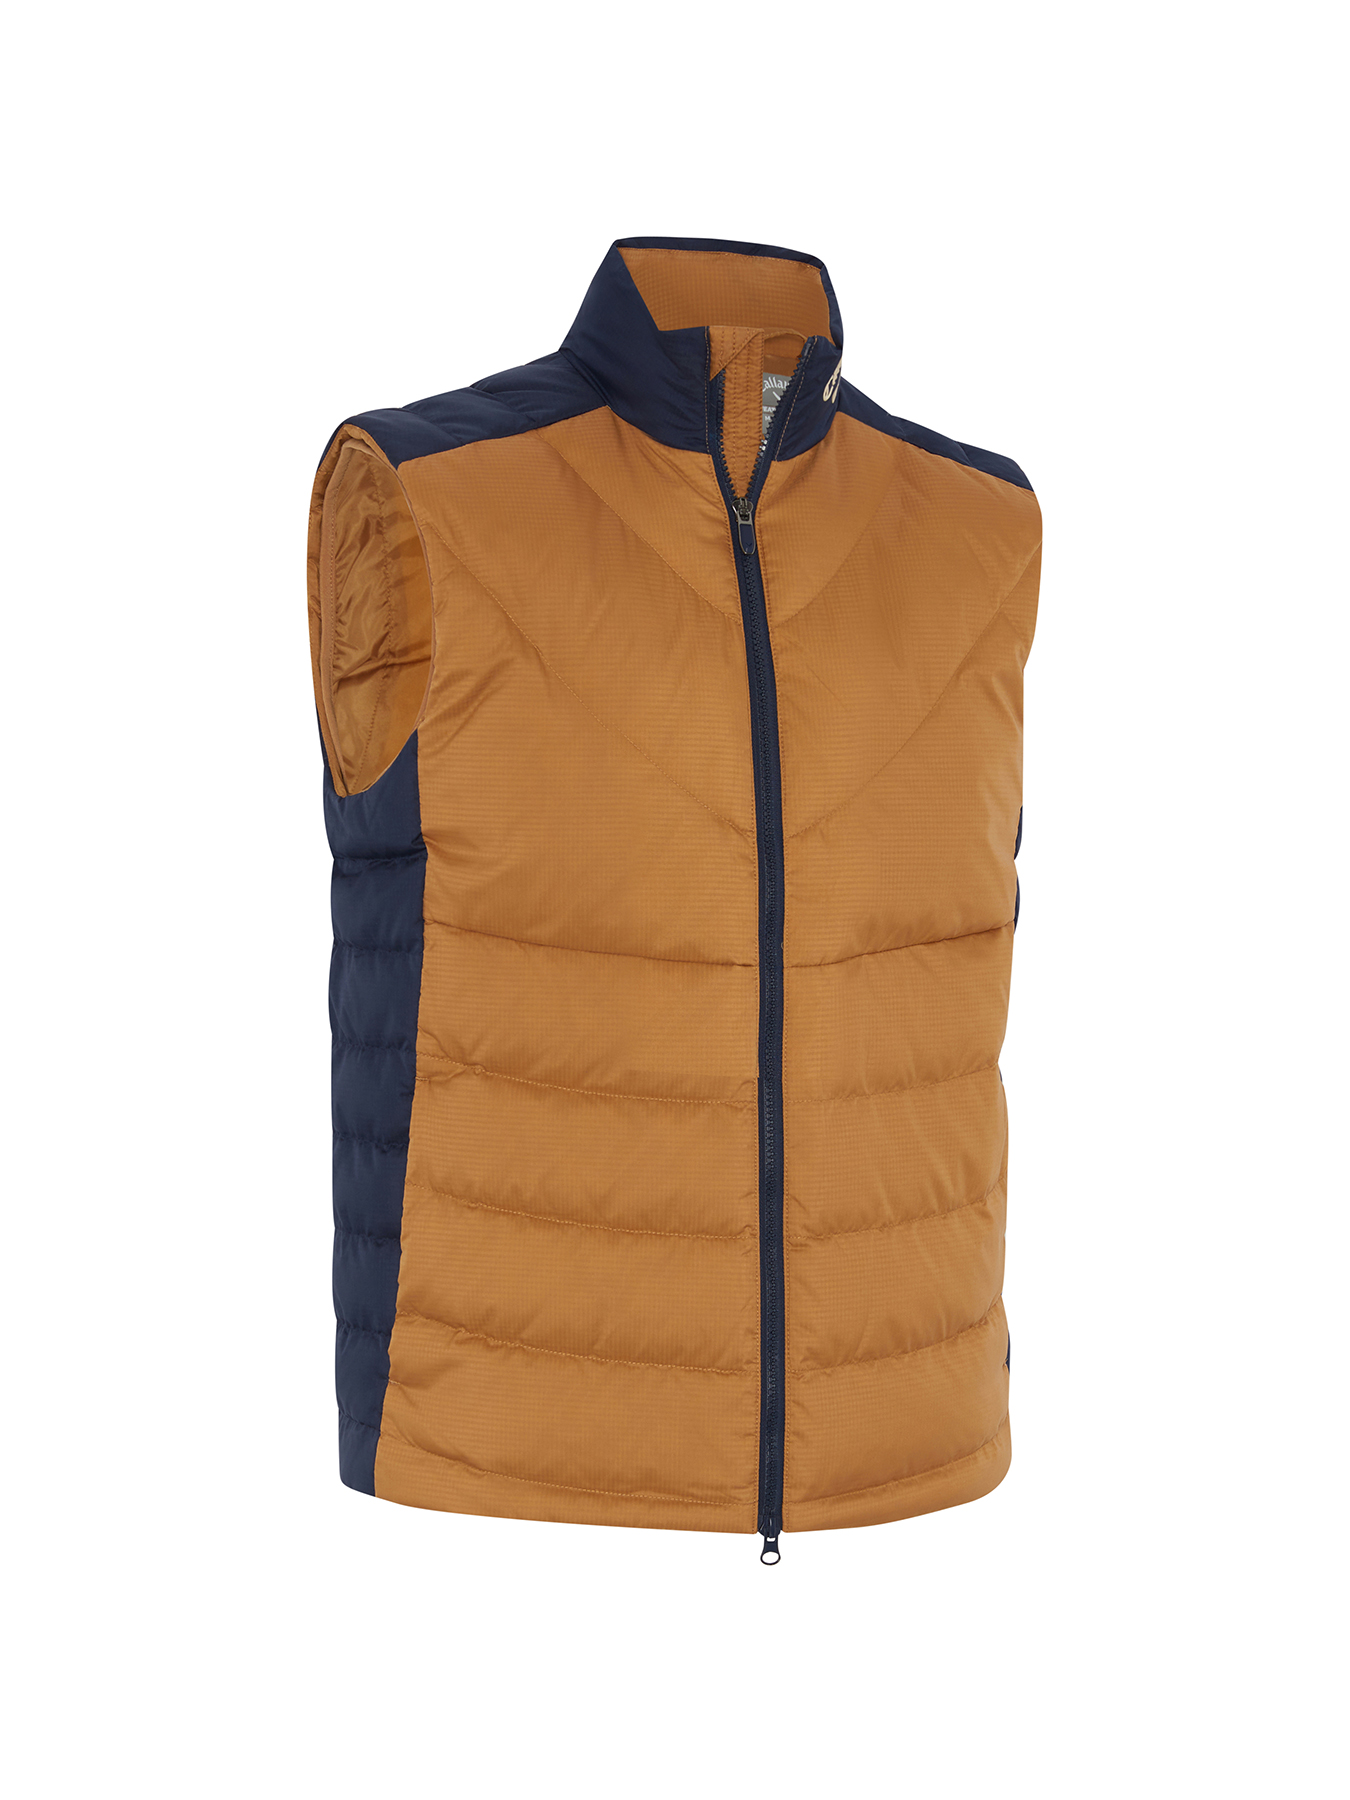 Callaway Primaloft Premium pánská golfová vesta, hnědá/tmavě modrá, vel. XXL